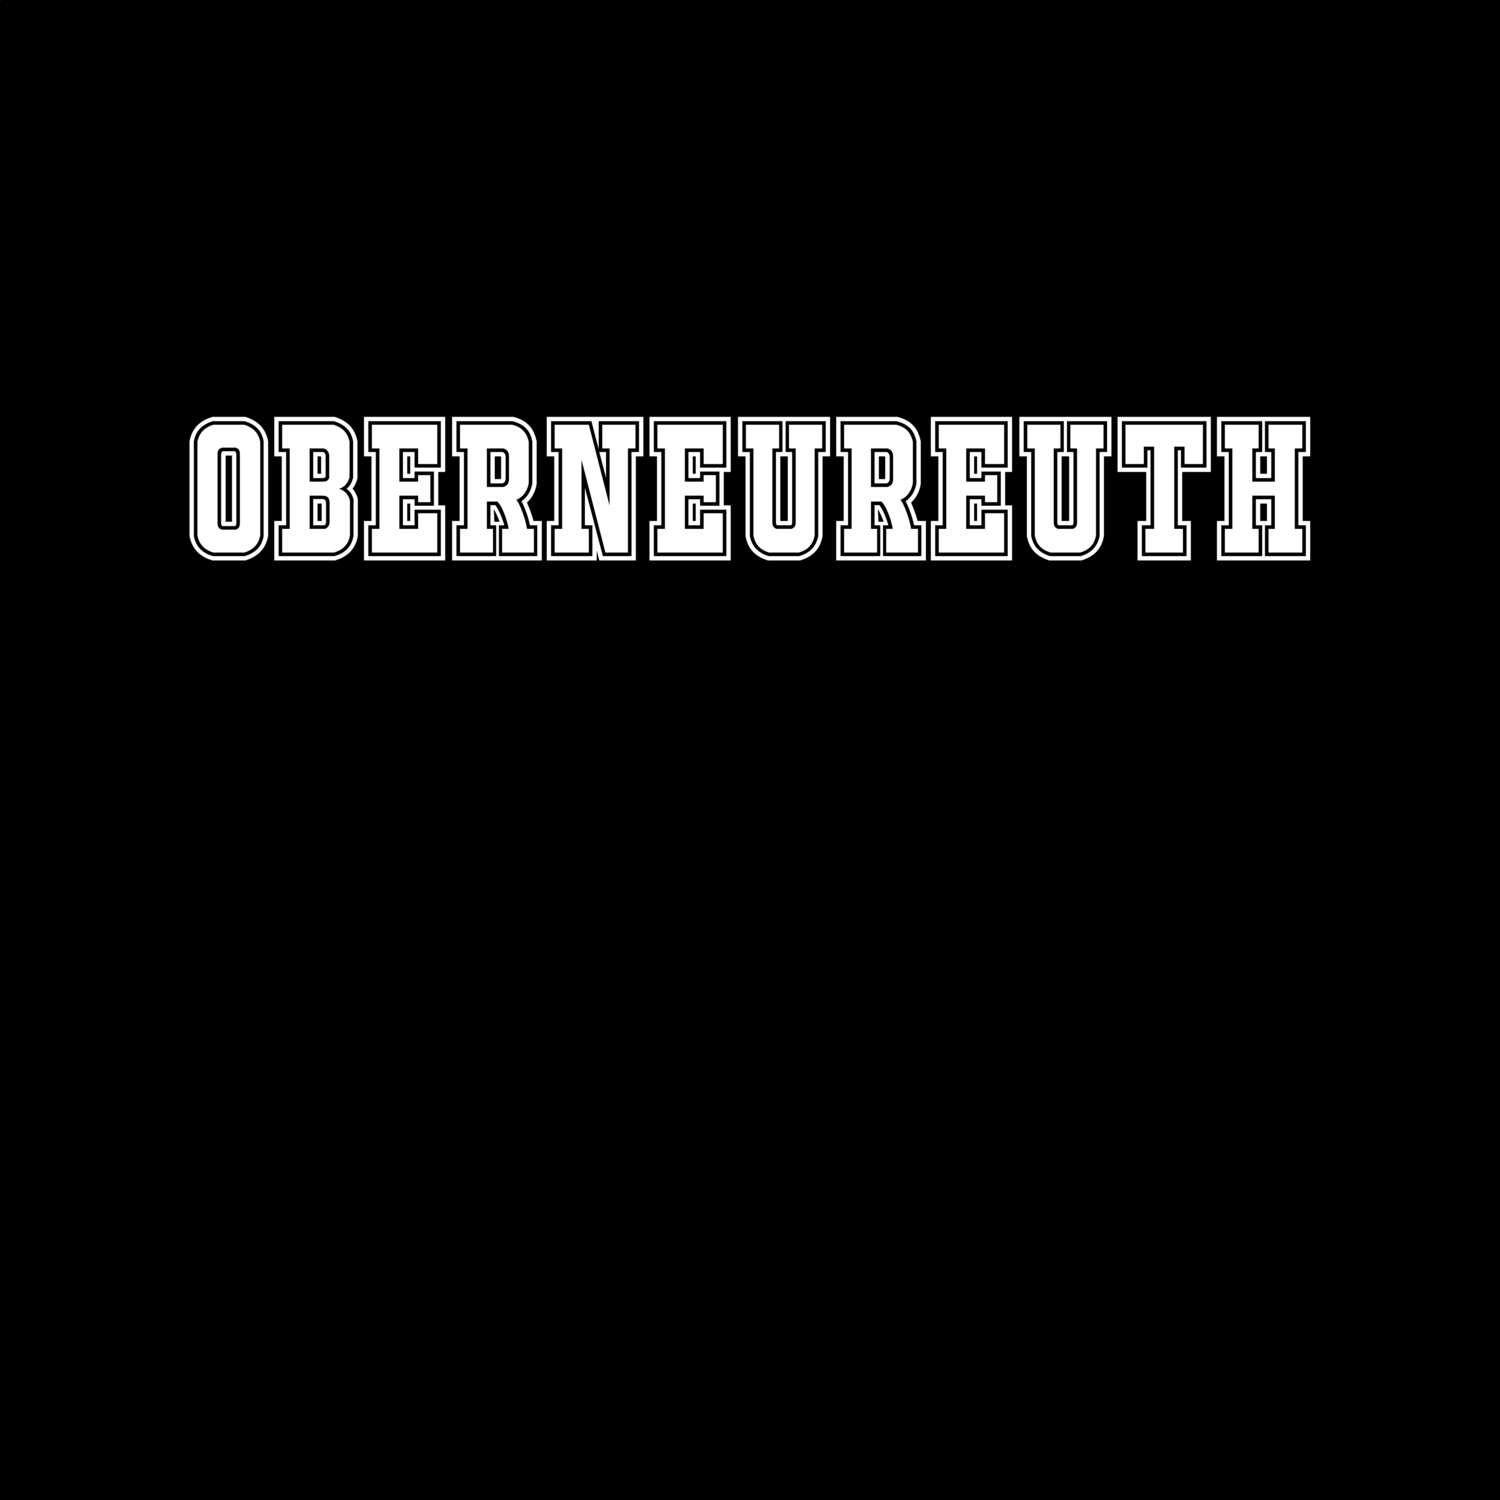 Oberneureuth T-Shirt »Classic«